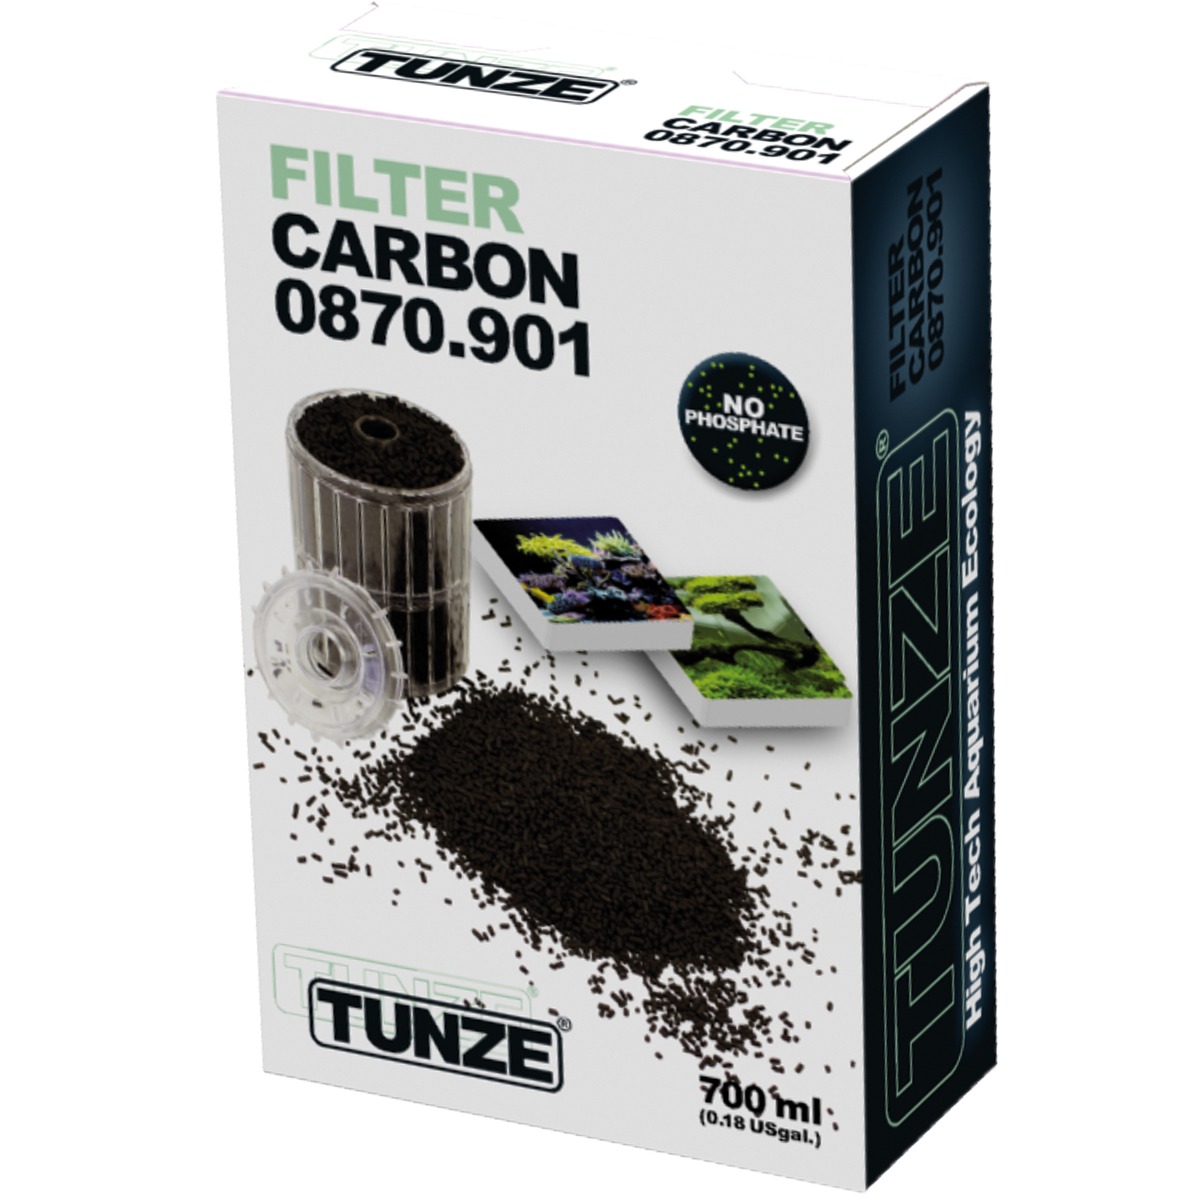 Filter Carbon 0870.901